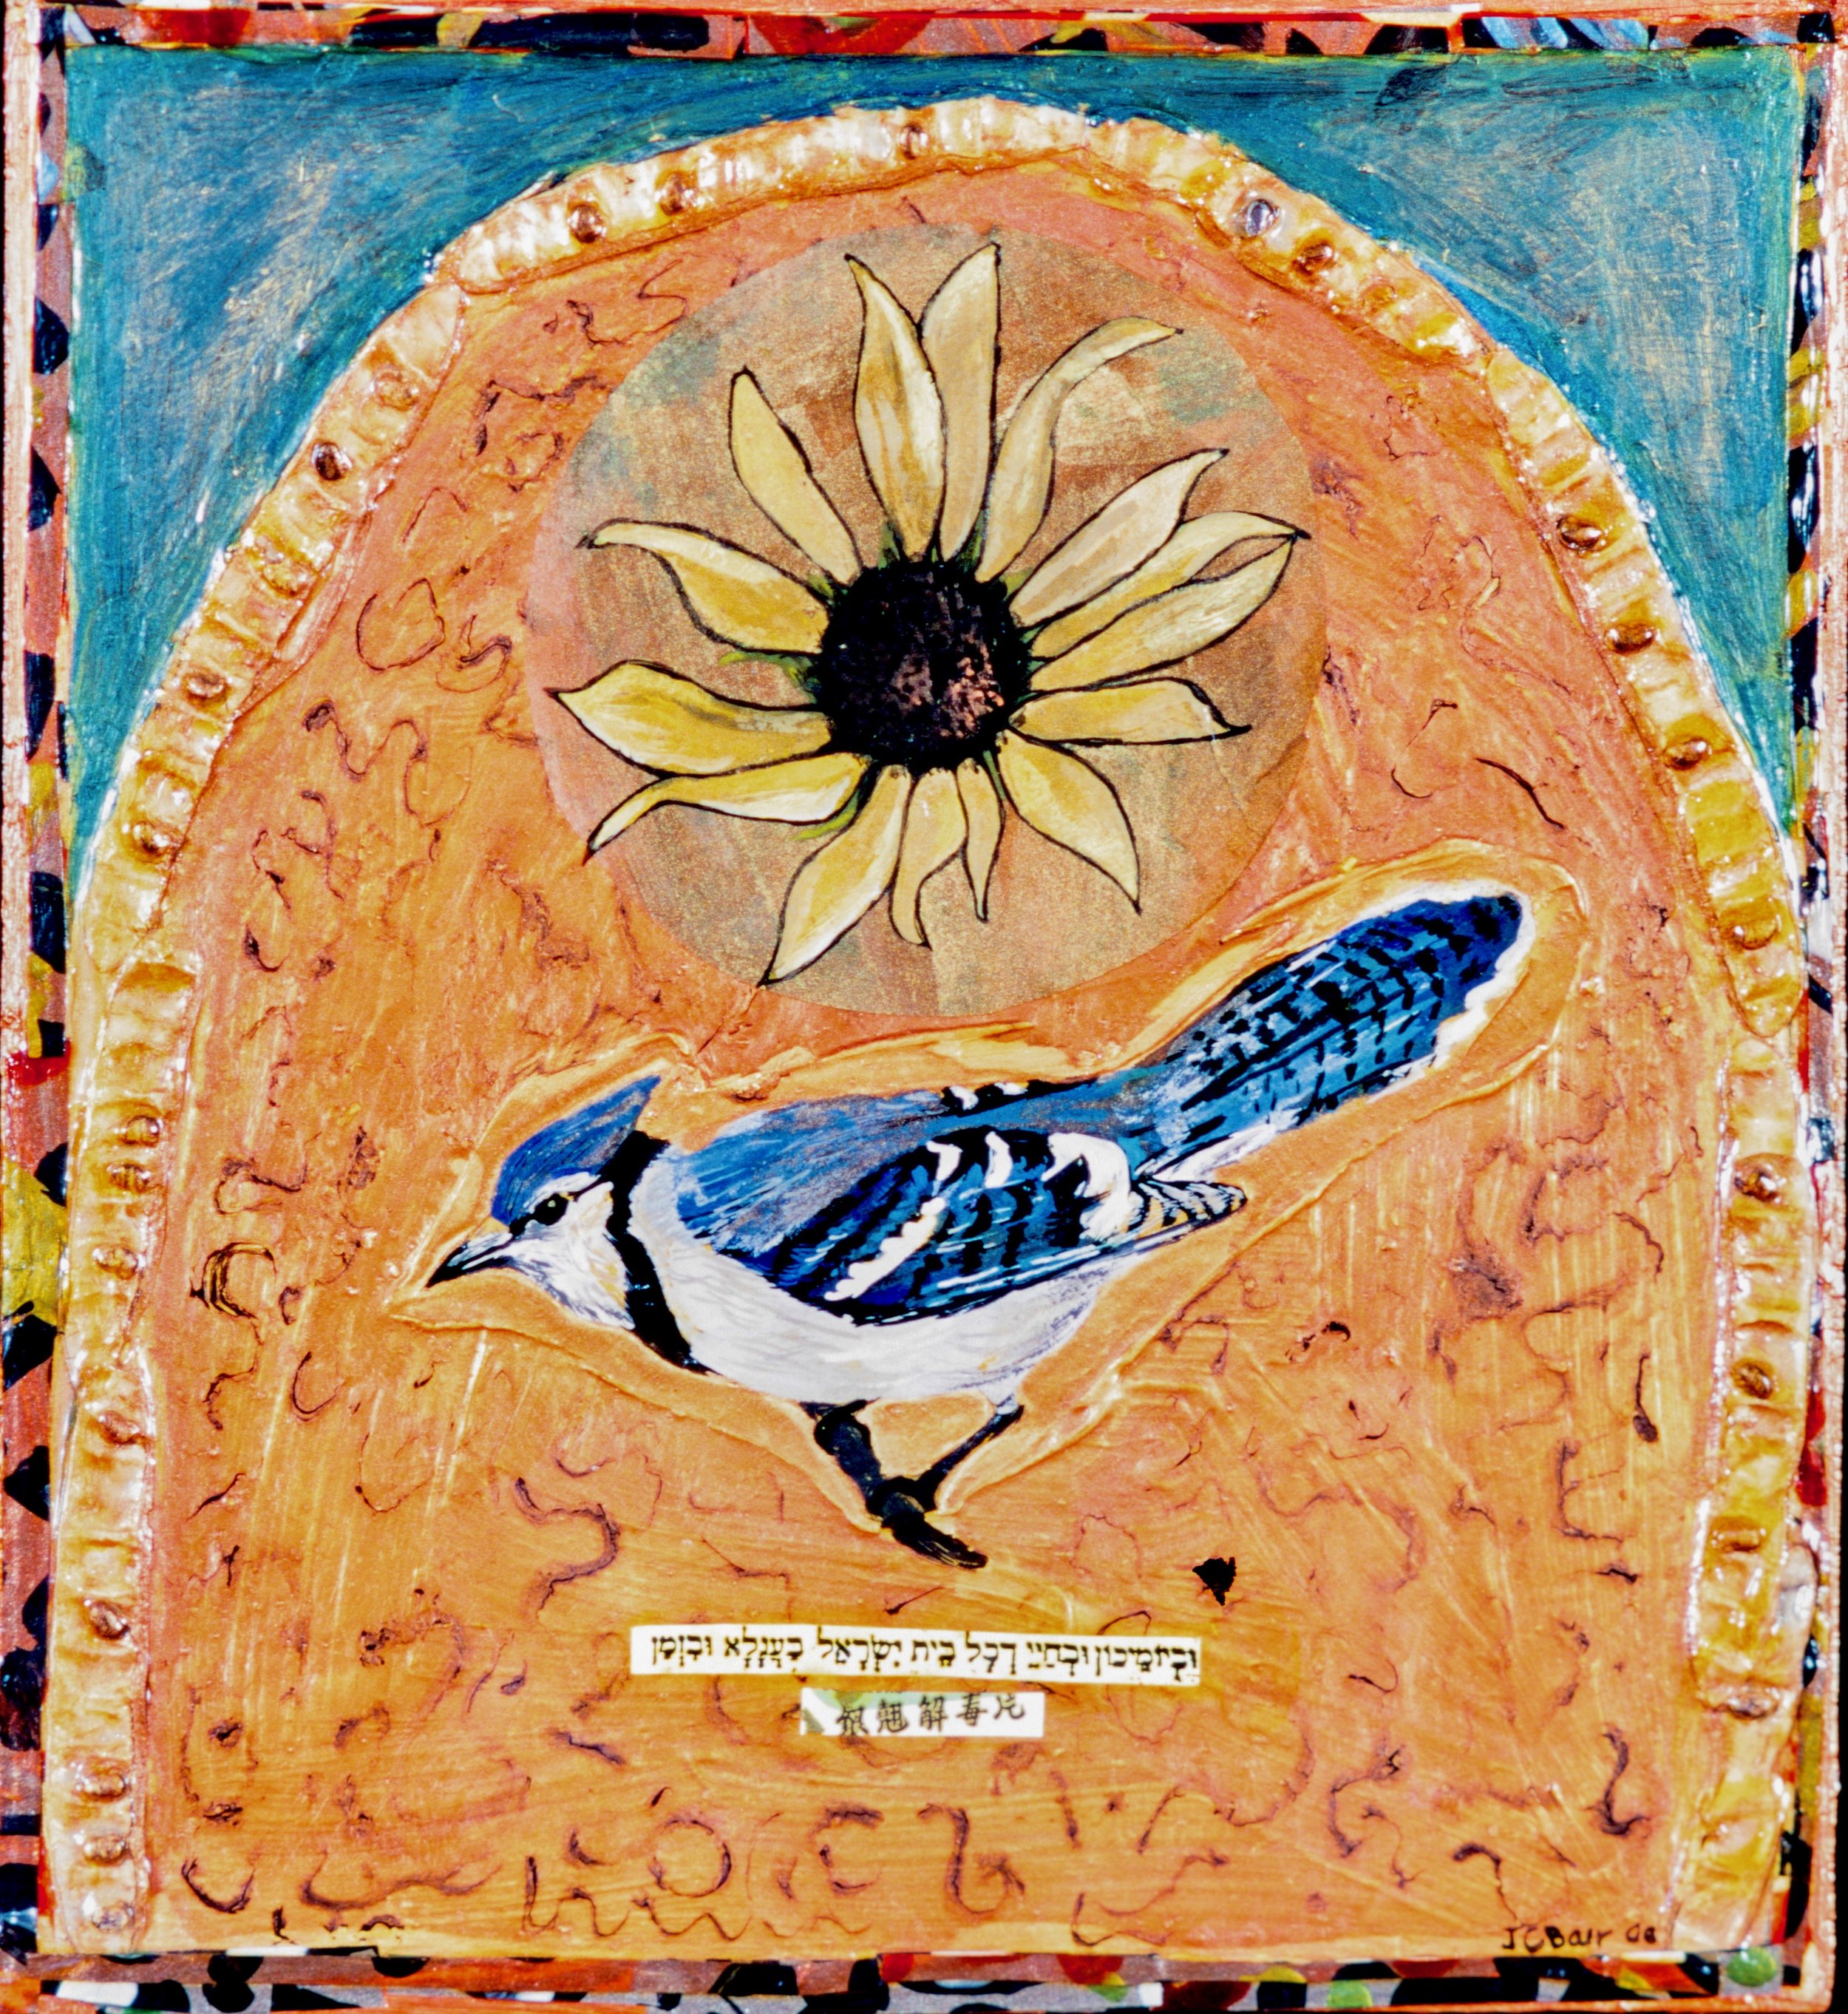 Blue Jay, 2000, 13 ½ x 12 ½, mixed media gouache and acrylic on wood panel, NFS